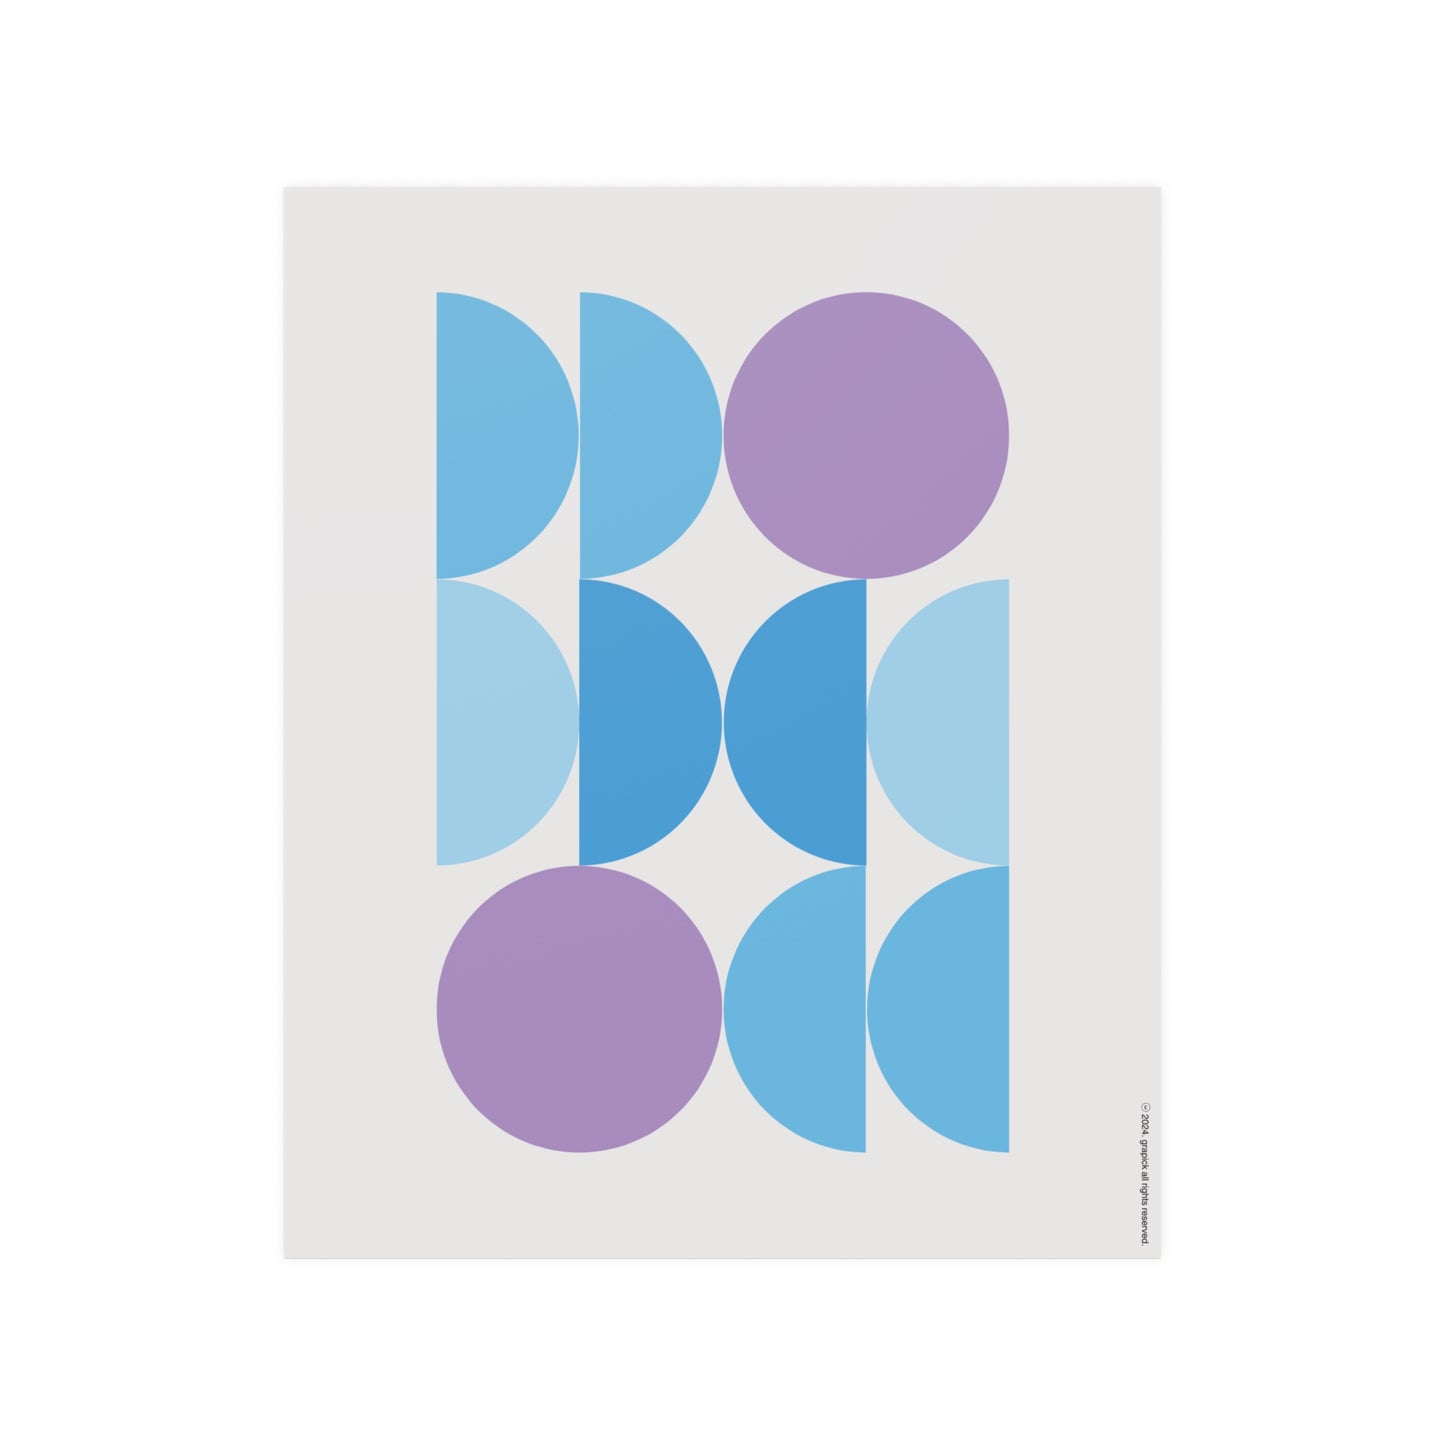 Minimalist Blue Bauhaus-Inspired Shapes Poster - Geometric Art